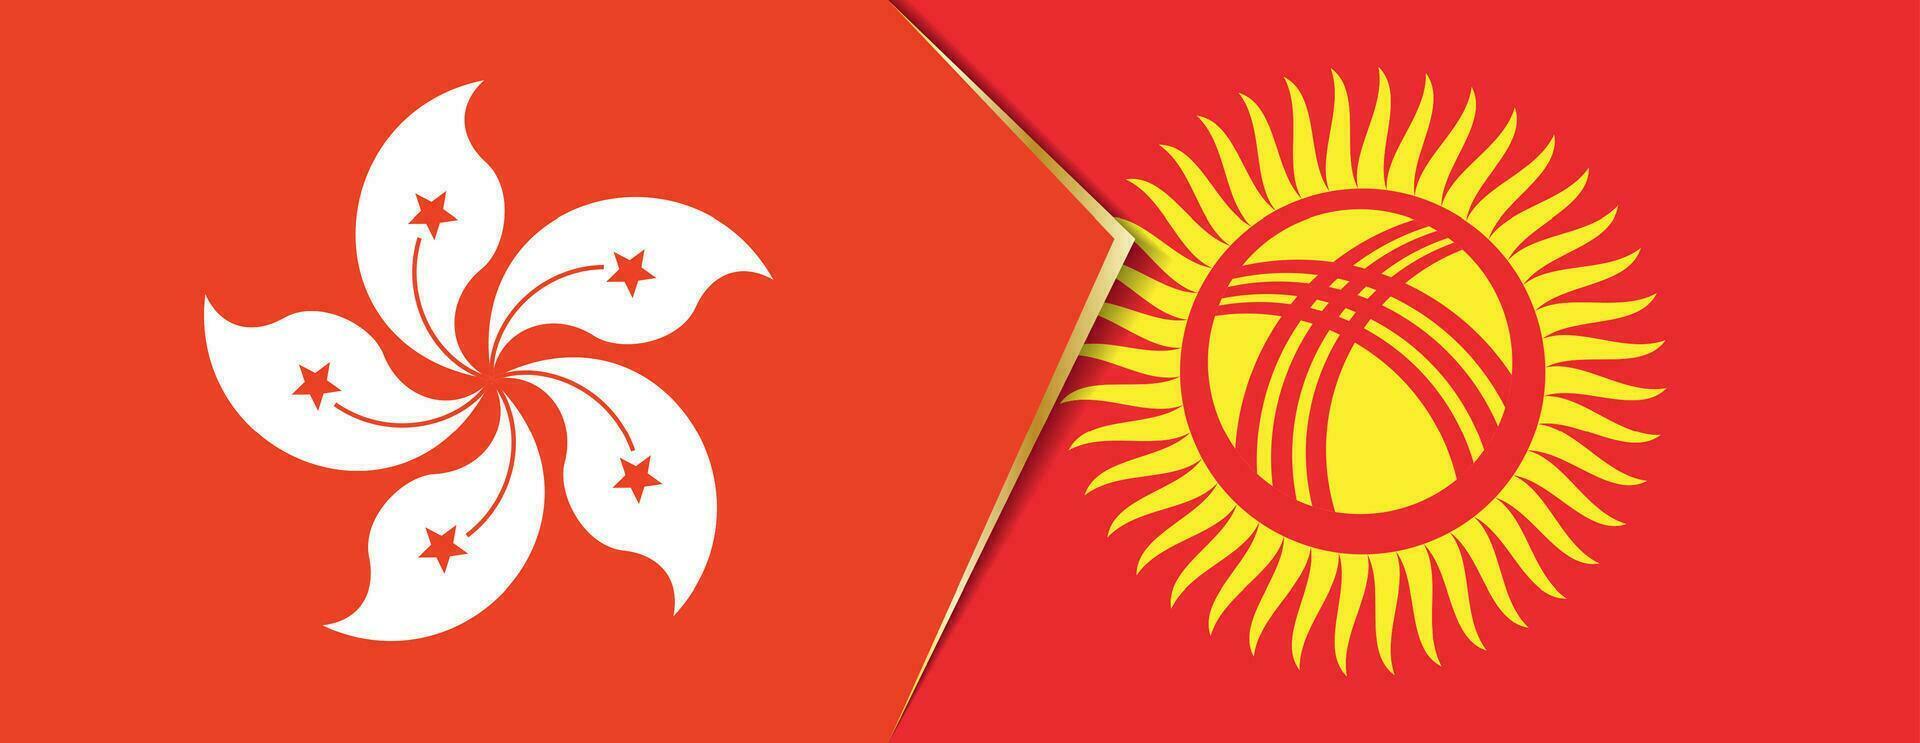 hong kong y Kirguistán banderas, dos vector banderas